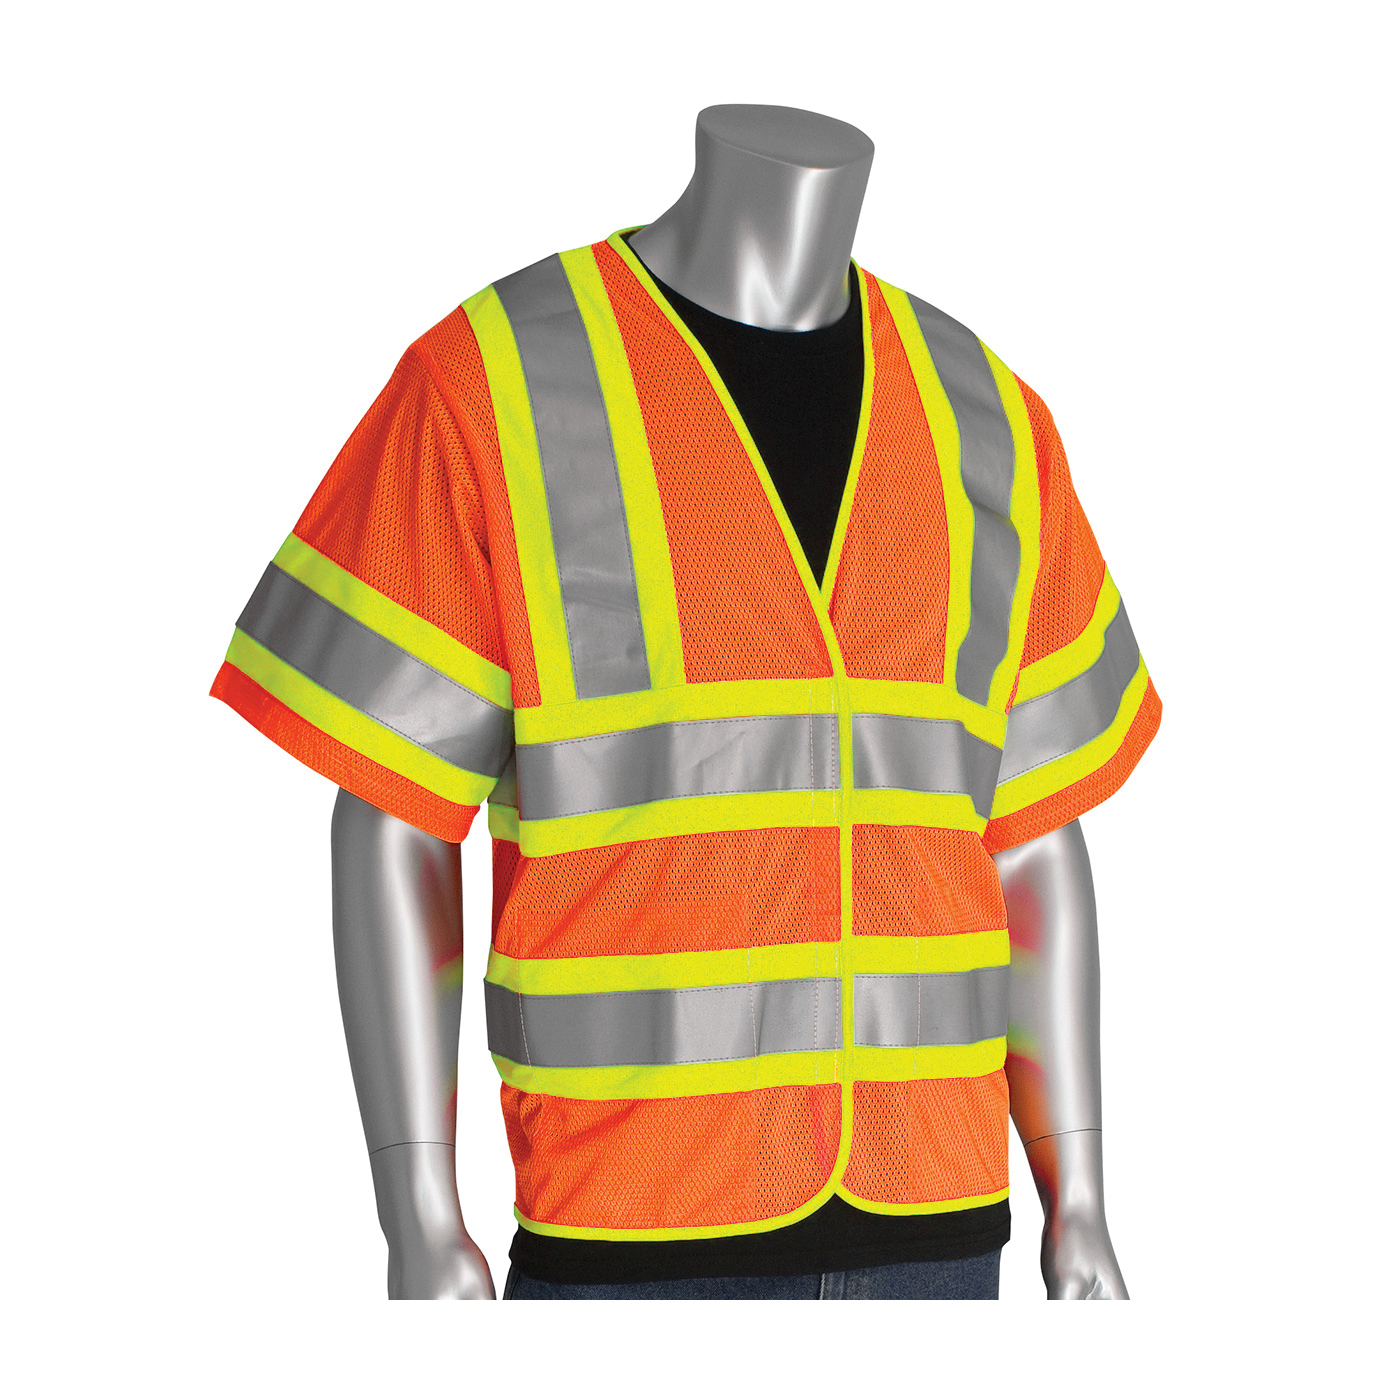 PIP® SafetyGear 305-HSVPFROR-4X/5X 2-Tone FR Treated Safety Vest, 4XL/5XL, Hi-Viz Orange, Polyester, Hook and Loop Closure, 2 Pockets, ANSI Class: Class 3, Specifications Met: ANSI Specified